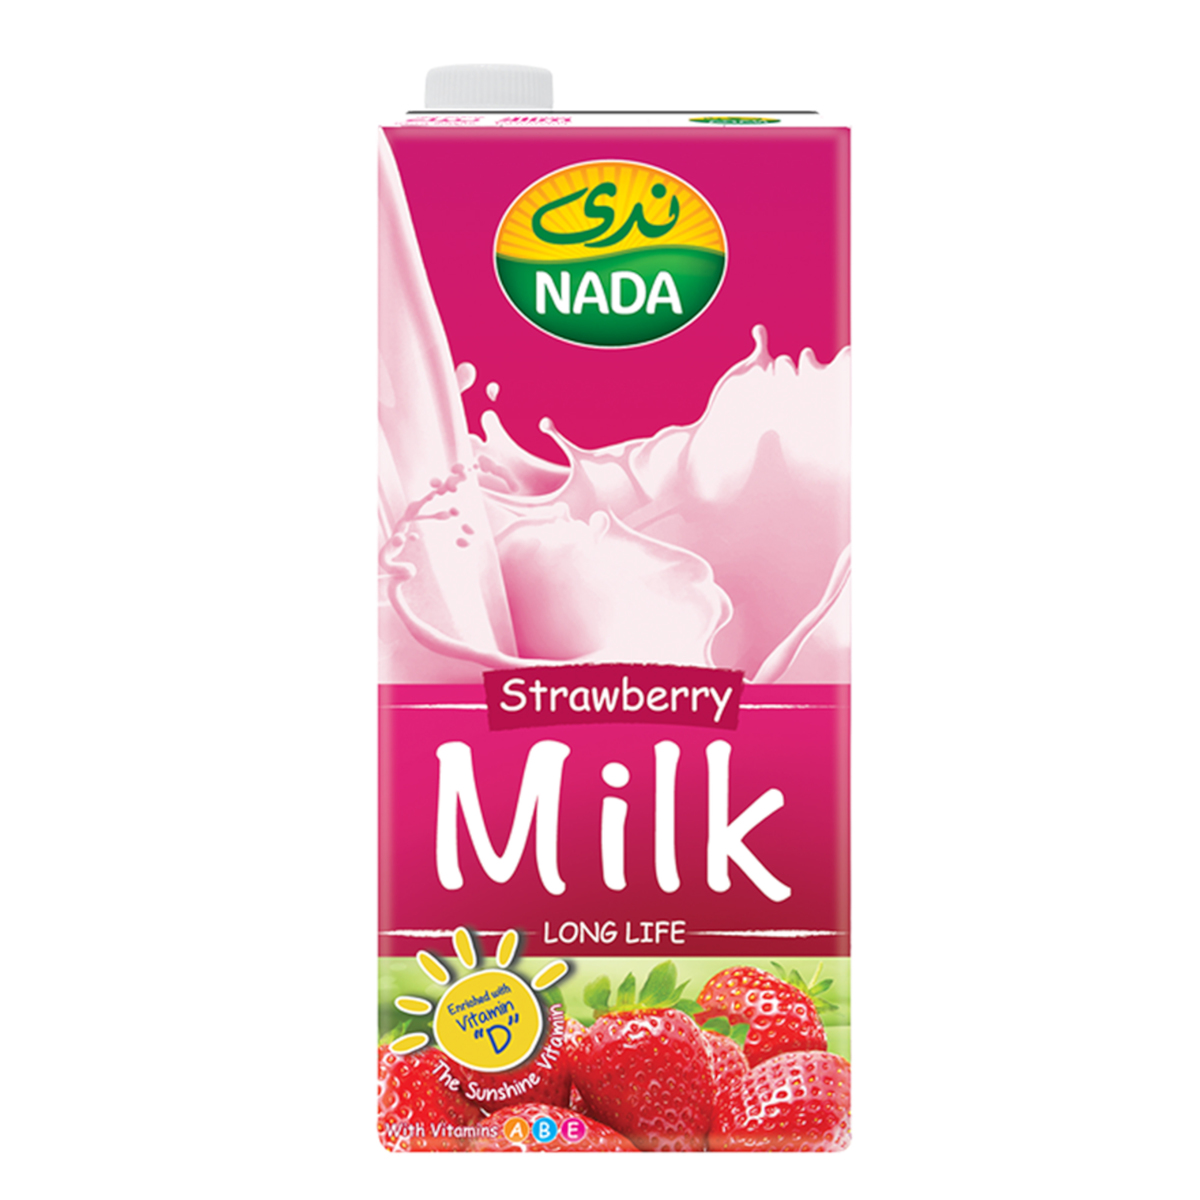 Nada Long Life Milk Strawberry 4 x 1 Litre